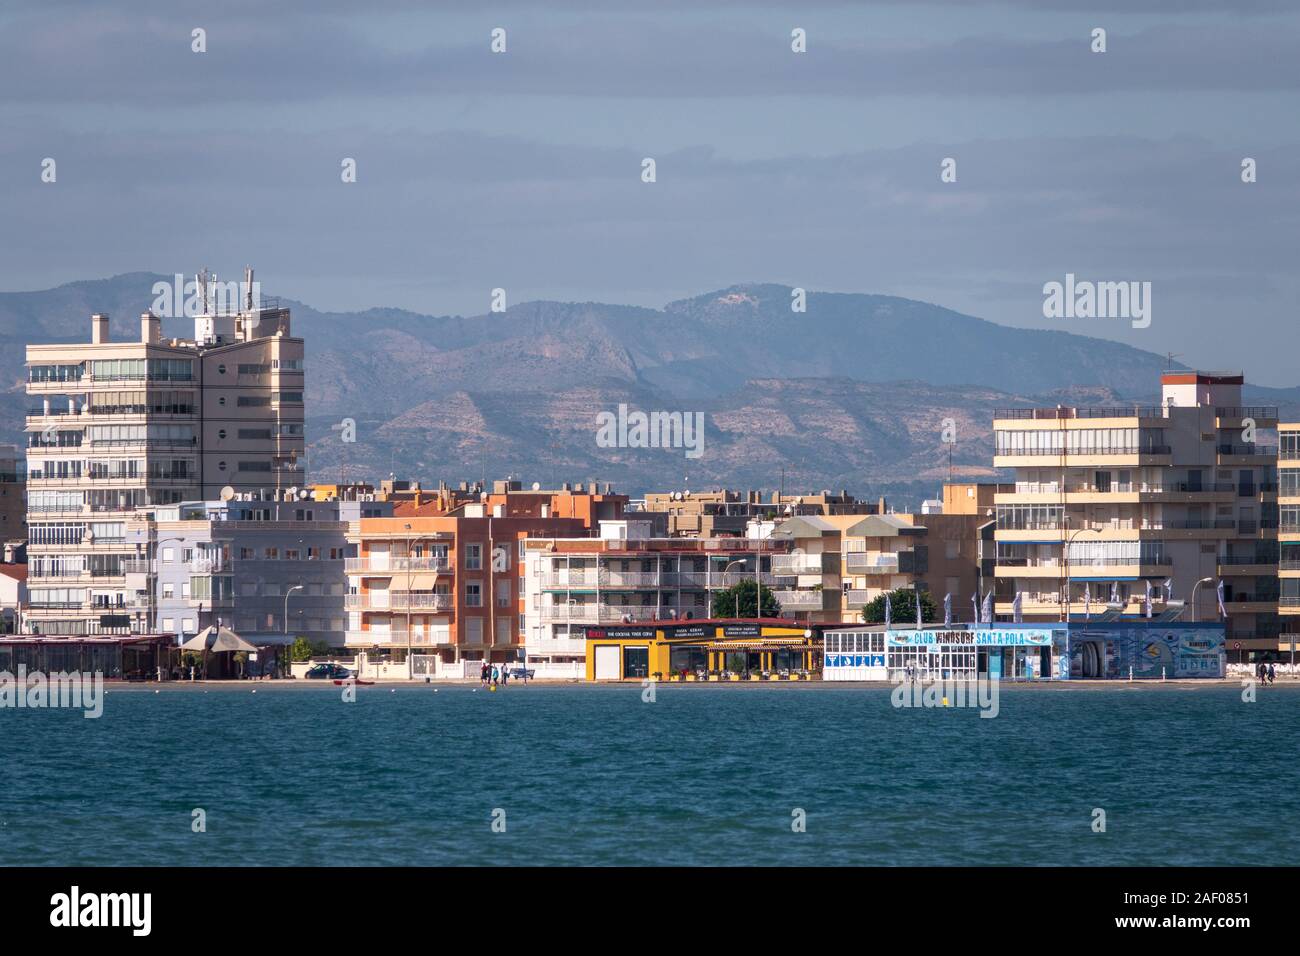 Views of the seaside Spanish resort of Santa Pola, Alicante, Spain taken across the harbour with heat haze distortion Stock Photo